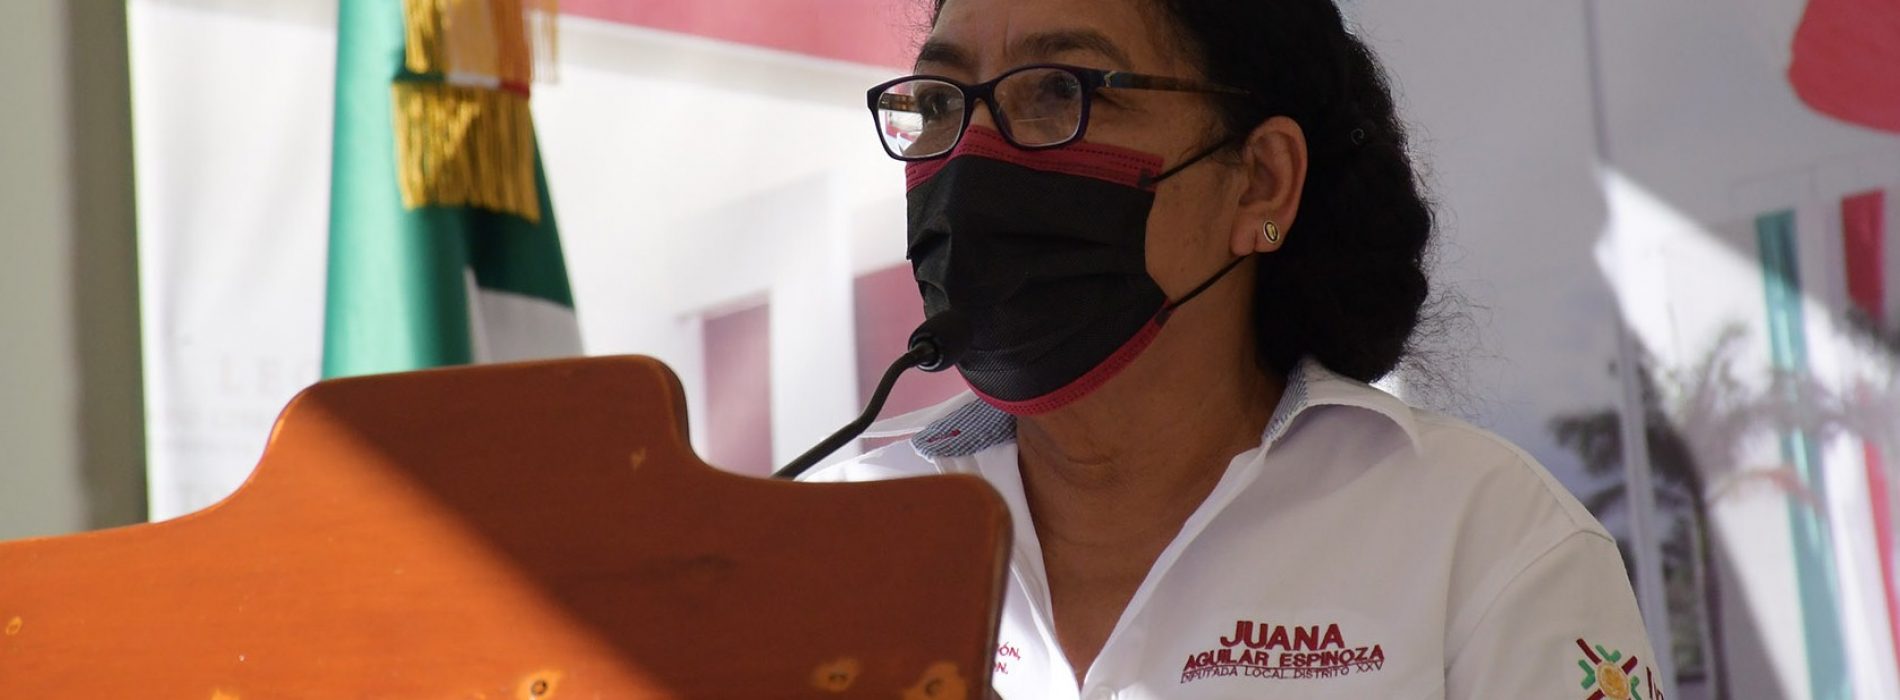 Grupos vulnerables, un compromiso para el Congreso local: diputada Juana Aguilar